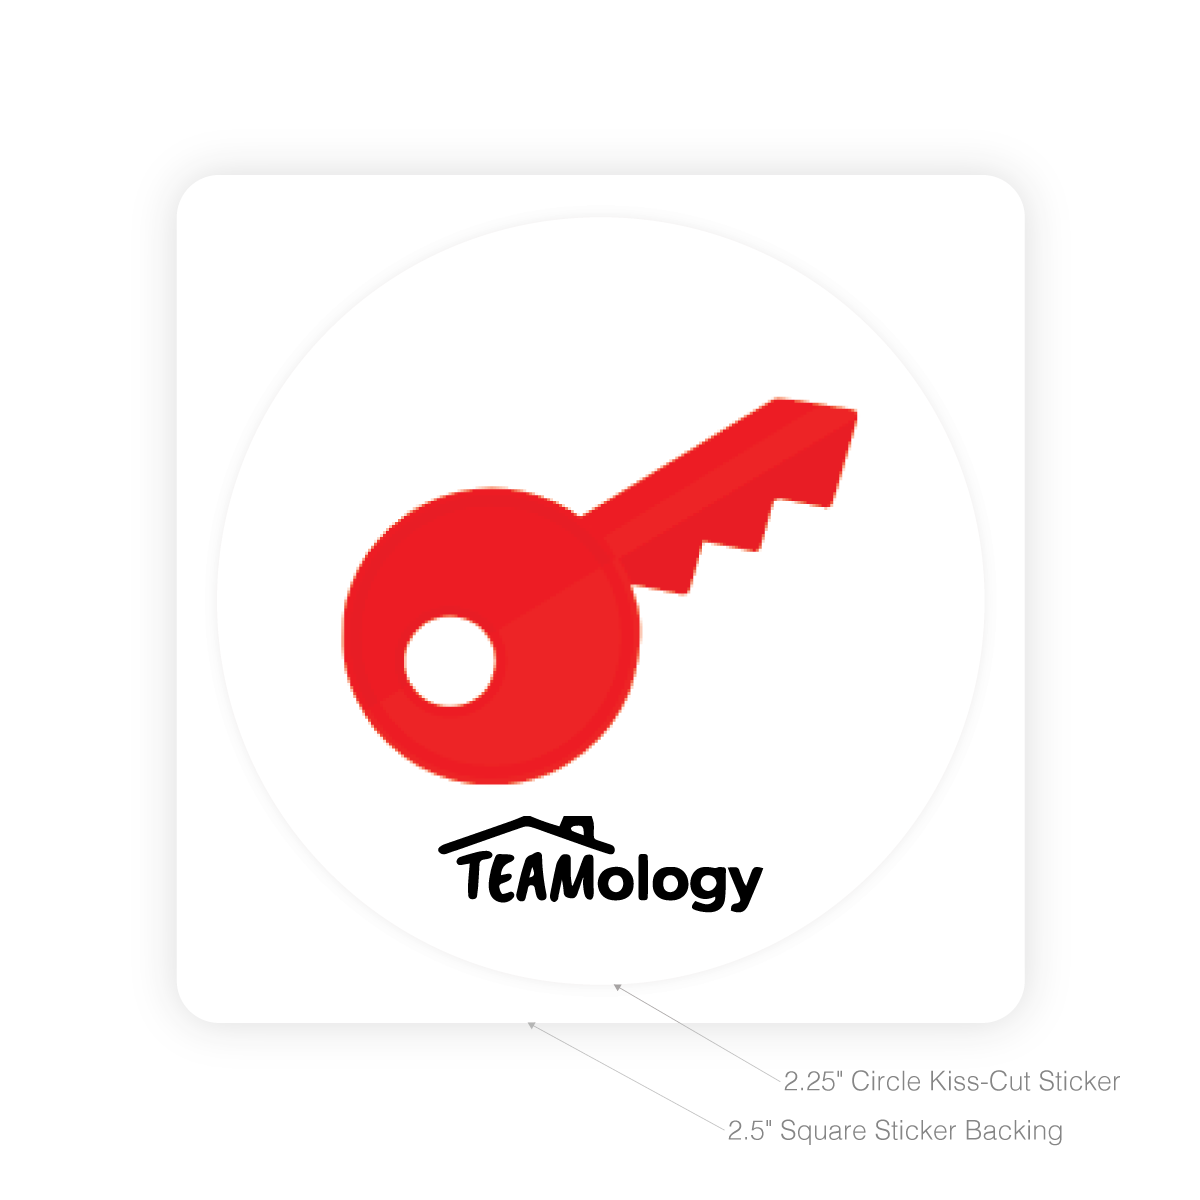 Round Sticker - Teamology (Key)